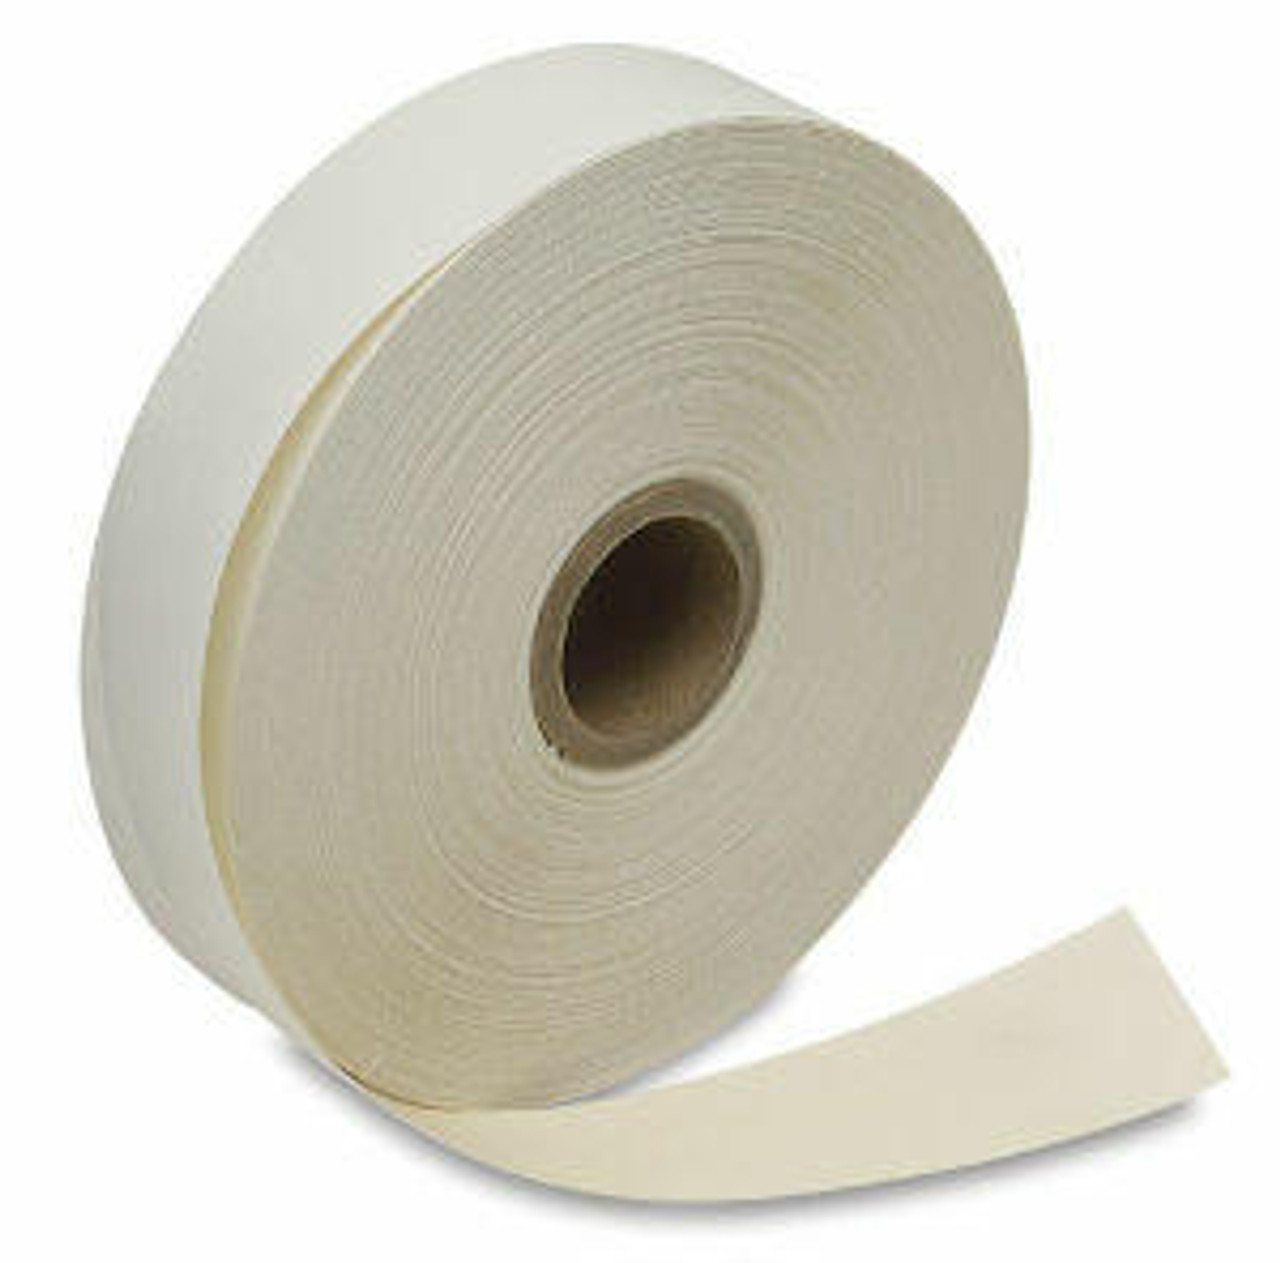 Lineco Gummed Paper Hinging Tape - 1 inch, White [GPHT1]